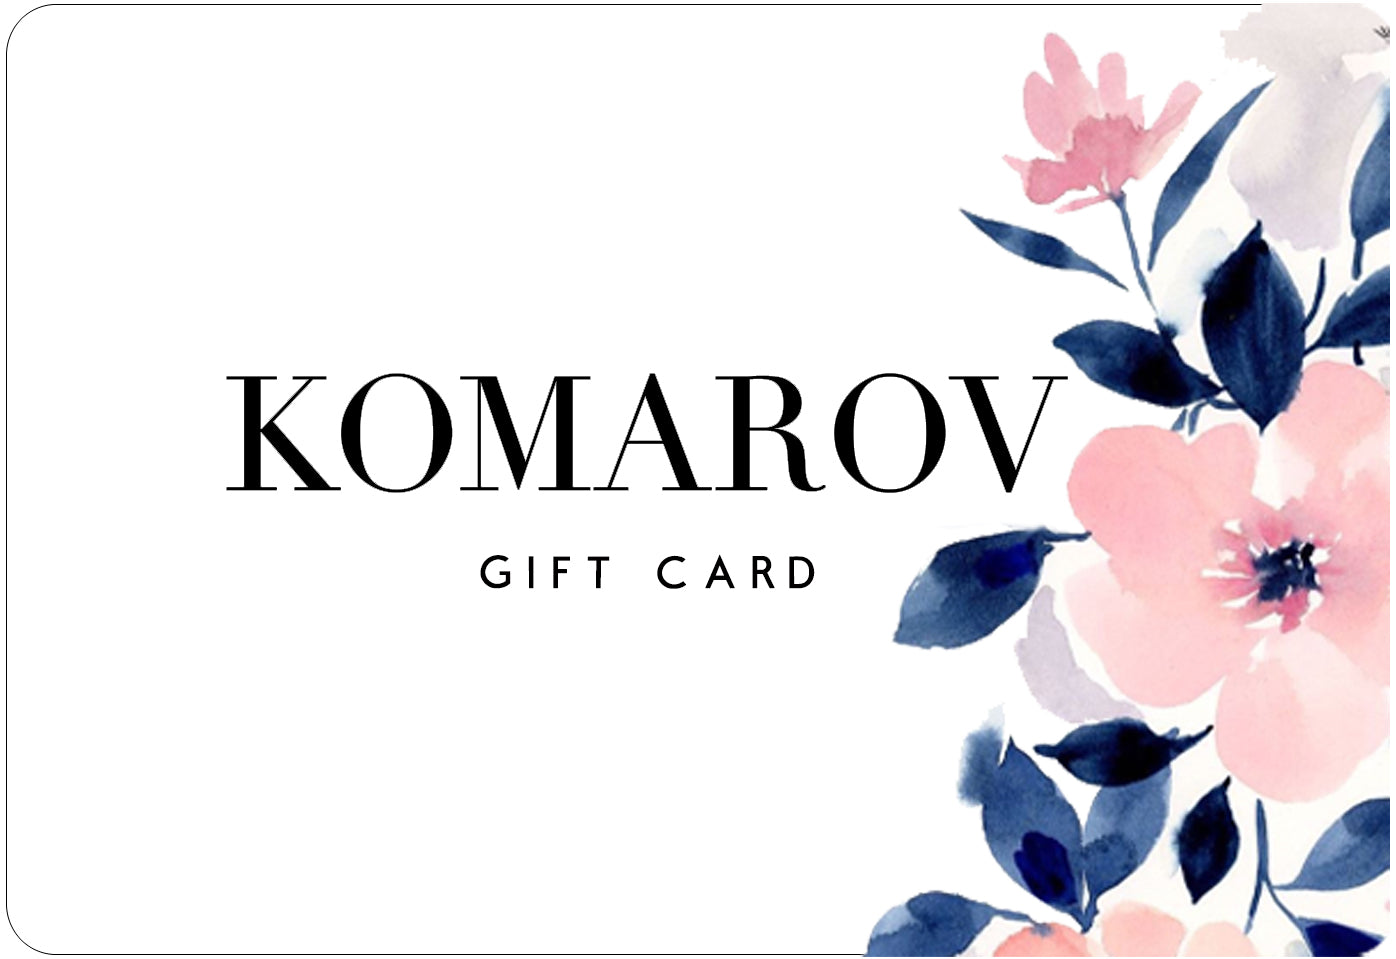 Komarov Gift Card